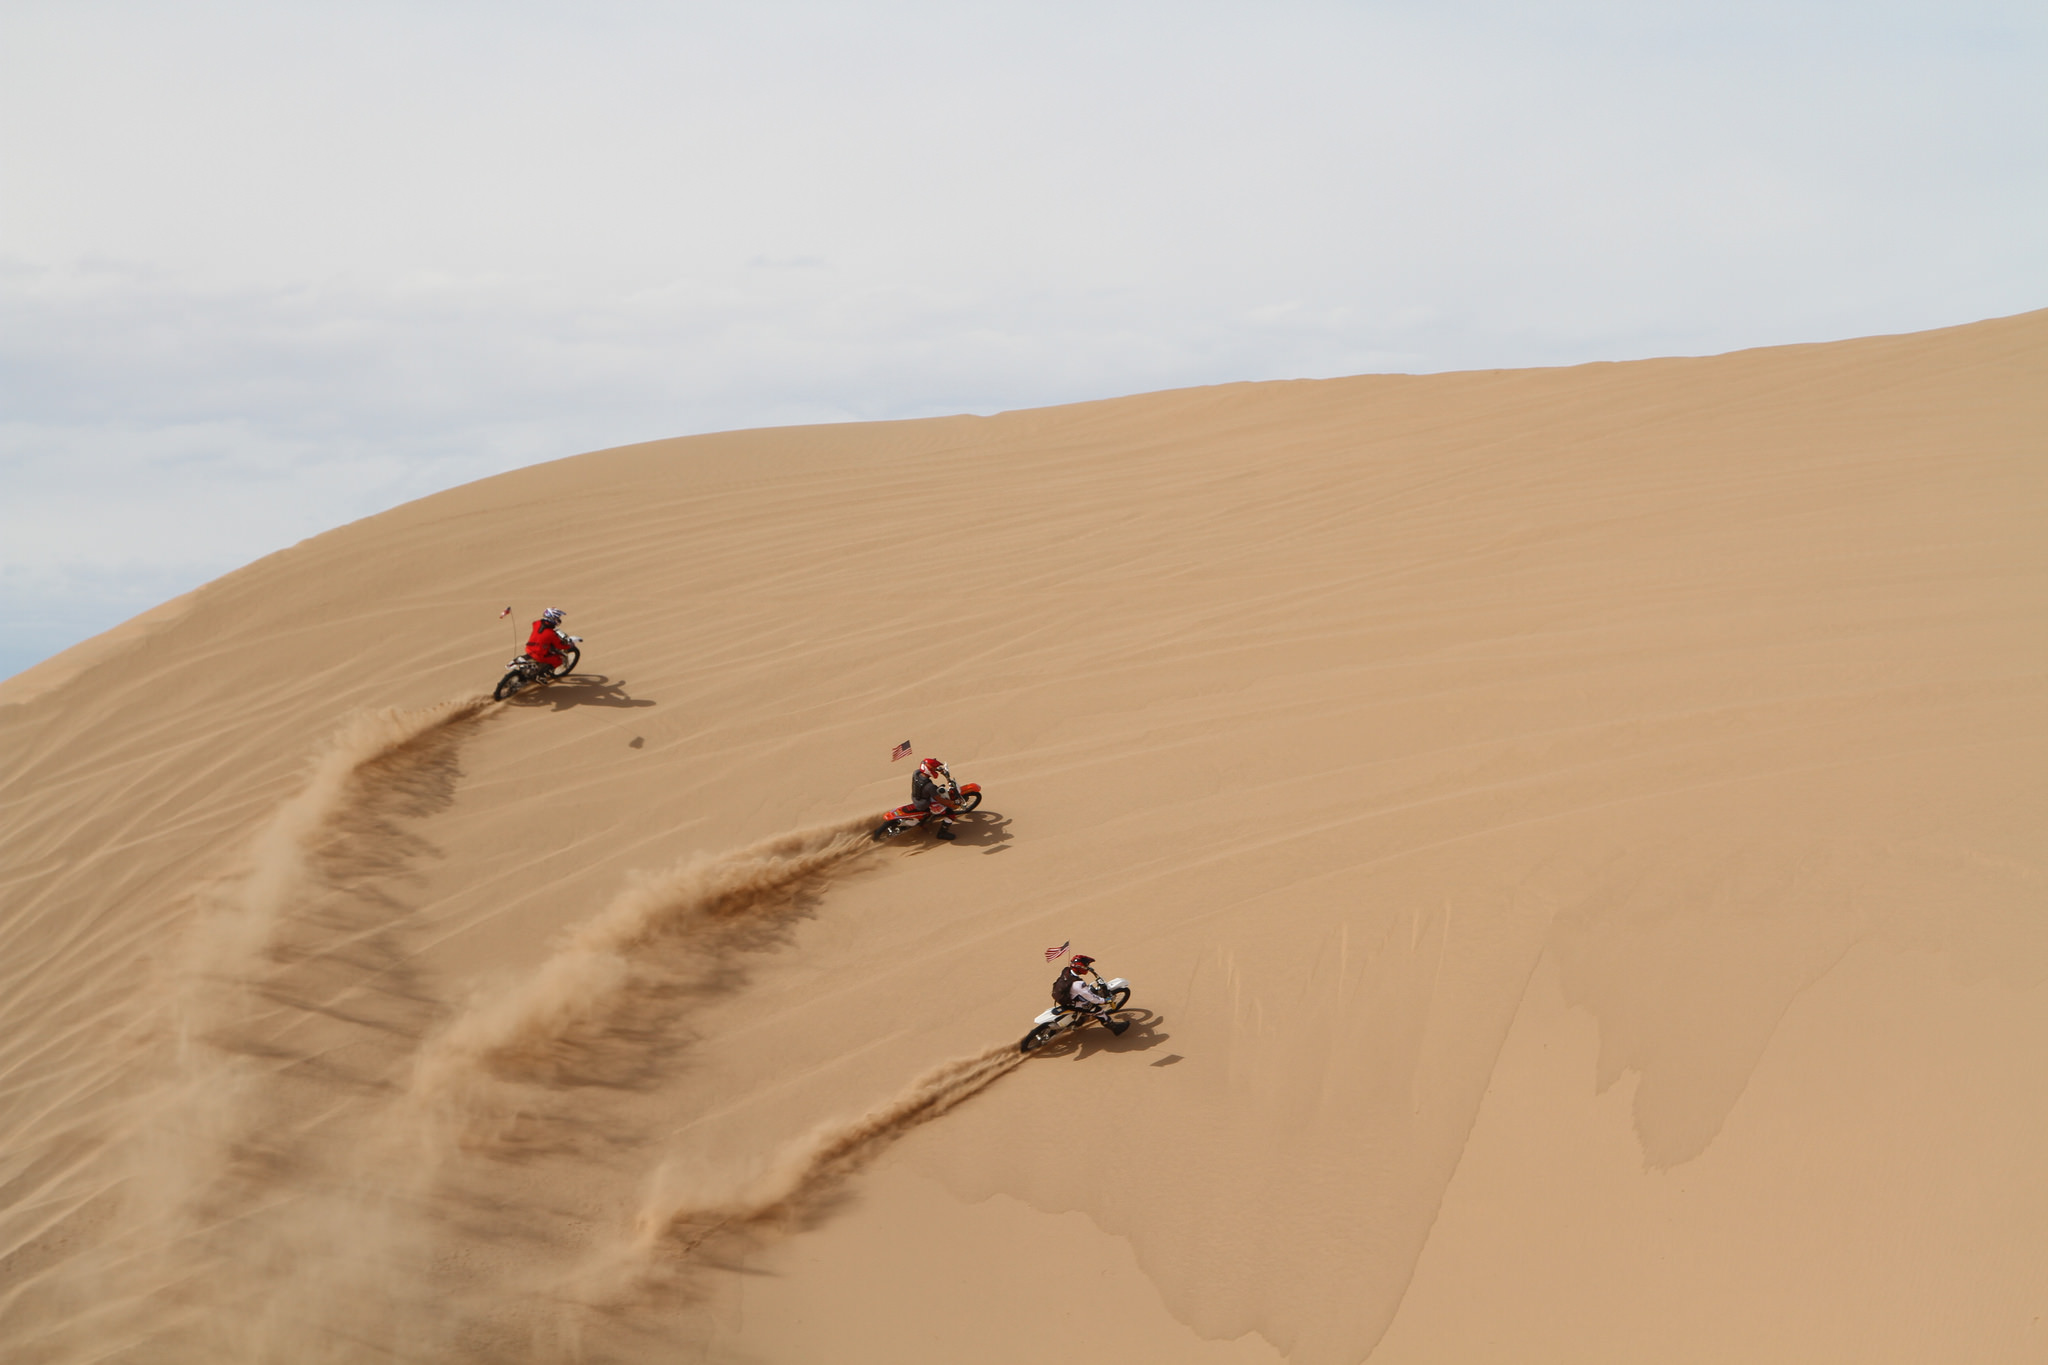 Dirt bikes on a sand dune